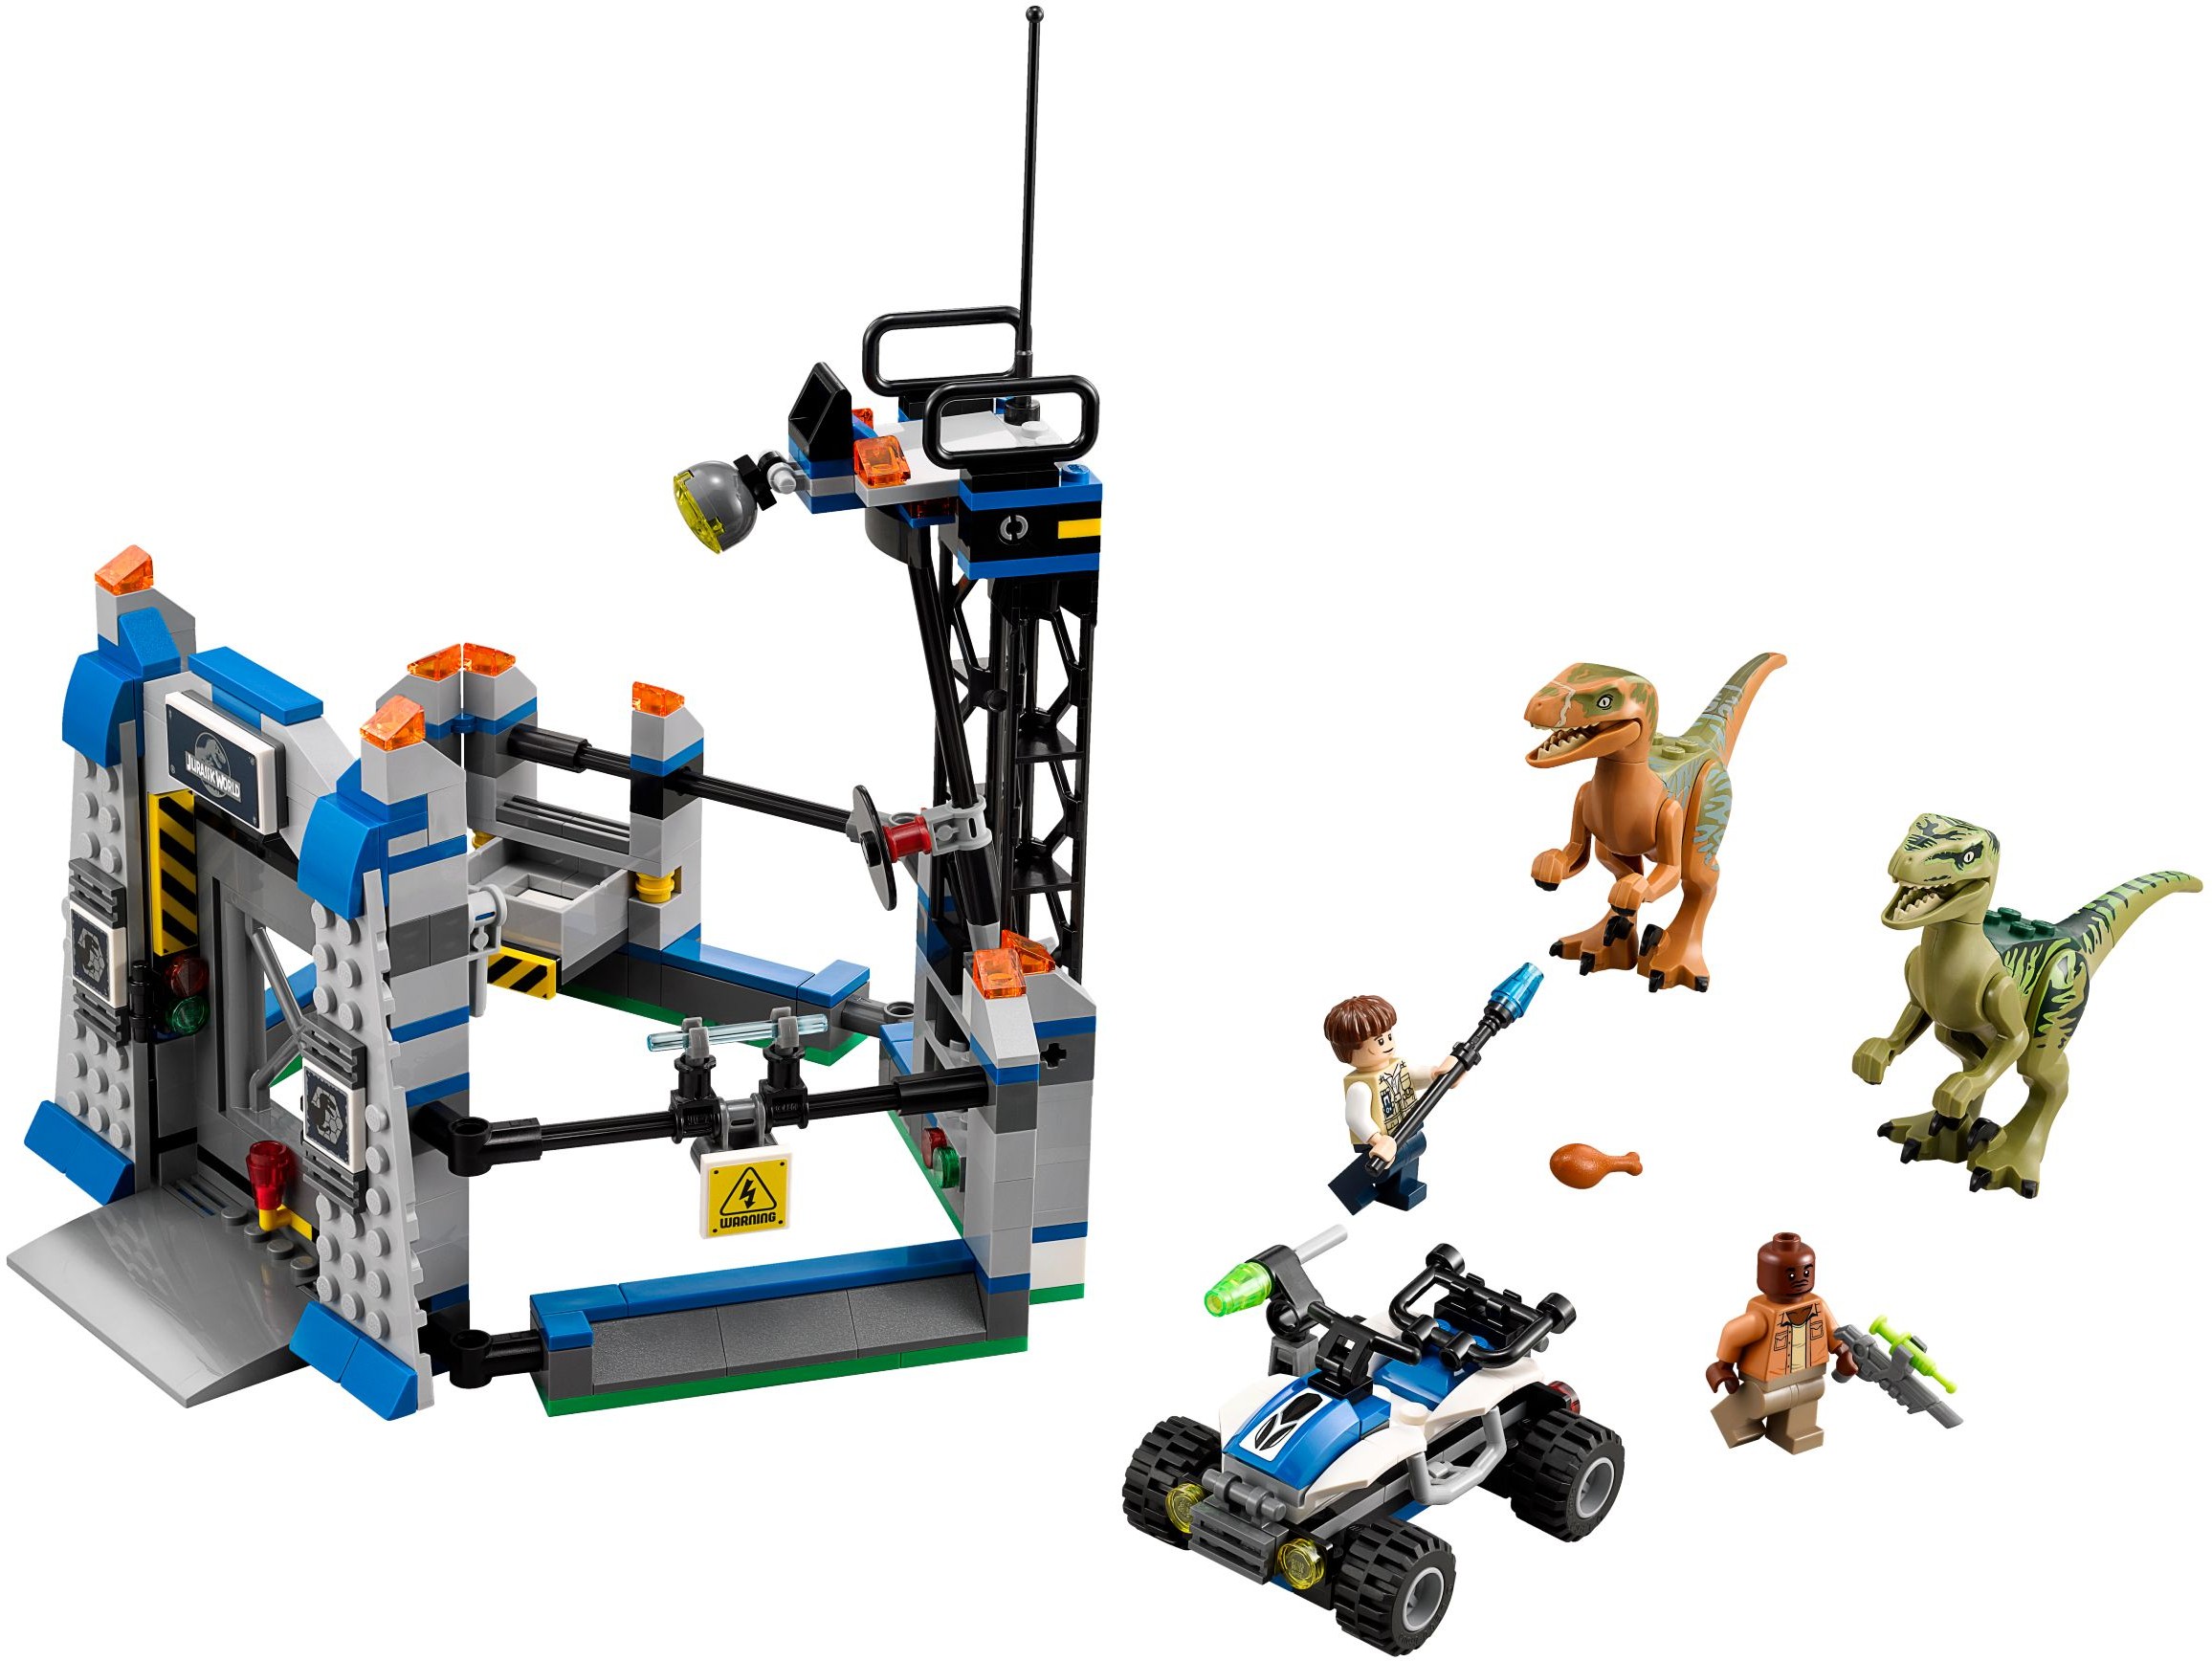 Lego Jurassic World (Video Game 2015) - IMDb